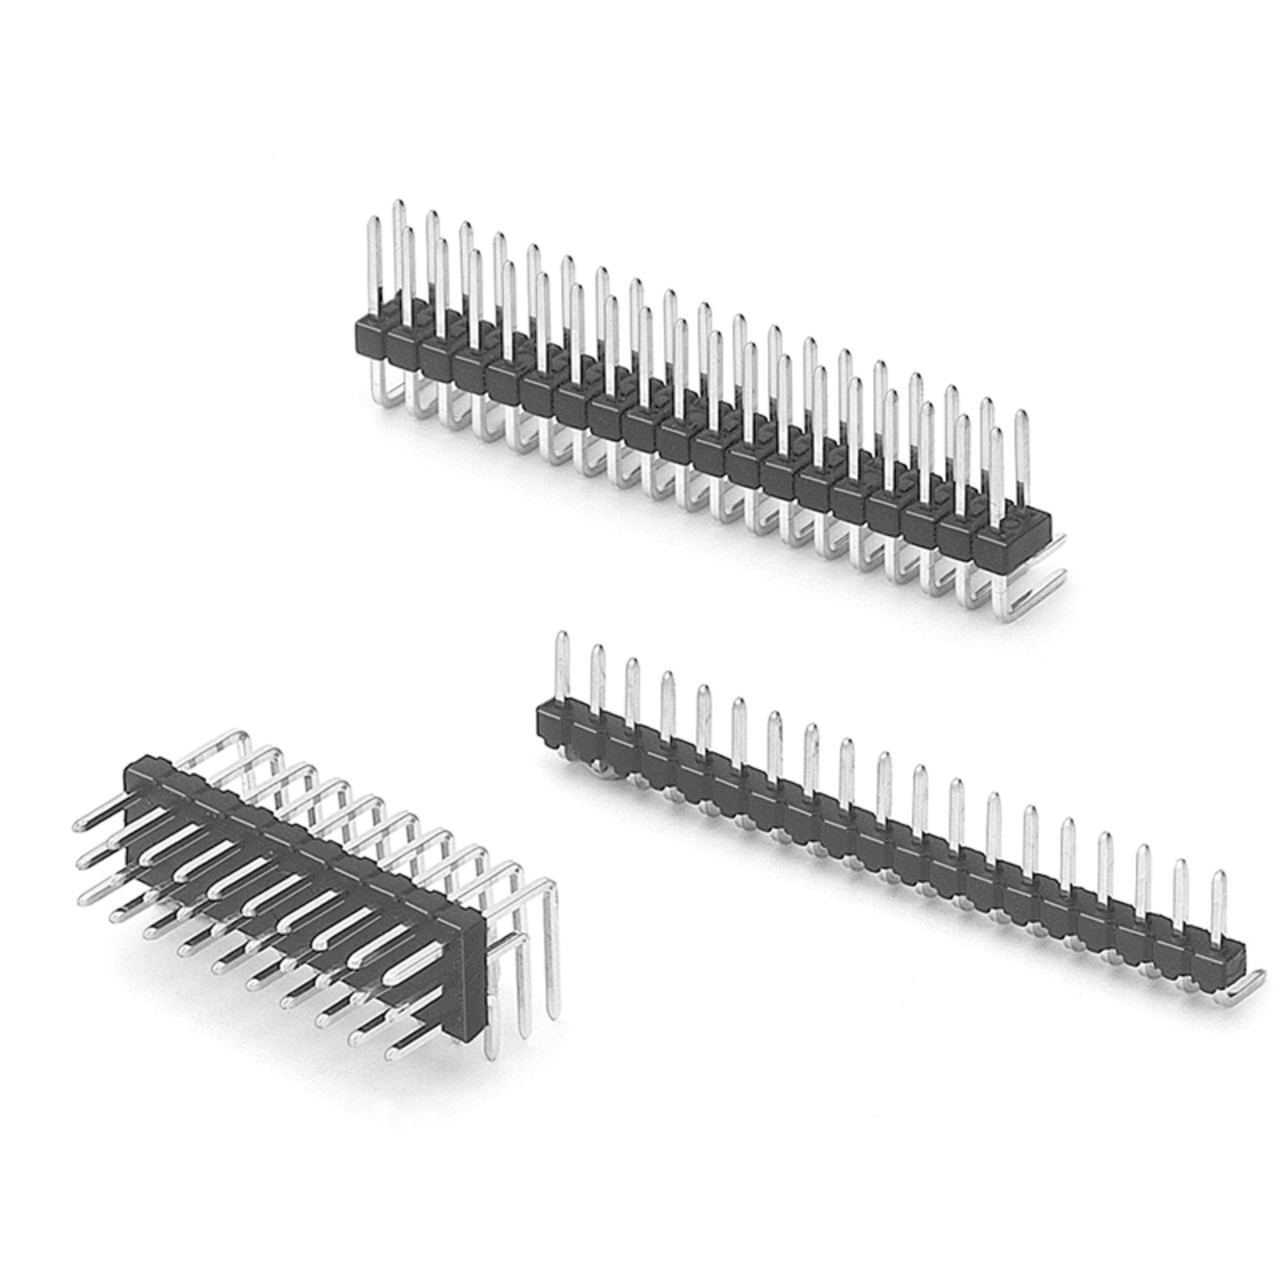 Stiftleiste- 2x 10-polig- abgewinkelt- RM 2-54 mm unter Komponenten